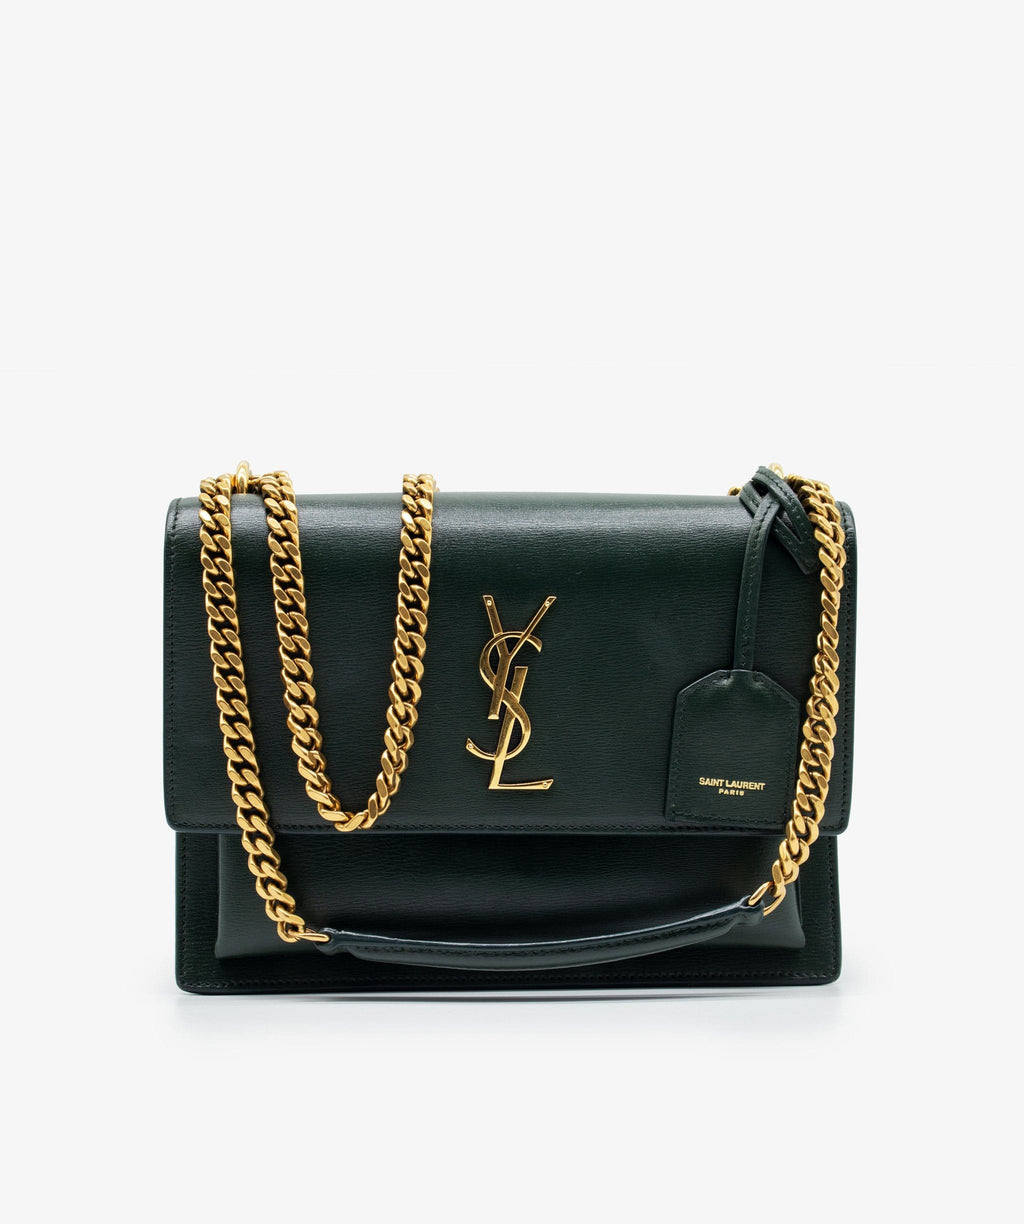 Yves Saint Laurent, Bags, Ysl Yves Saint Laurent Bag